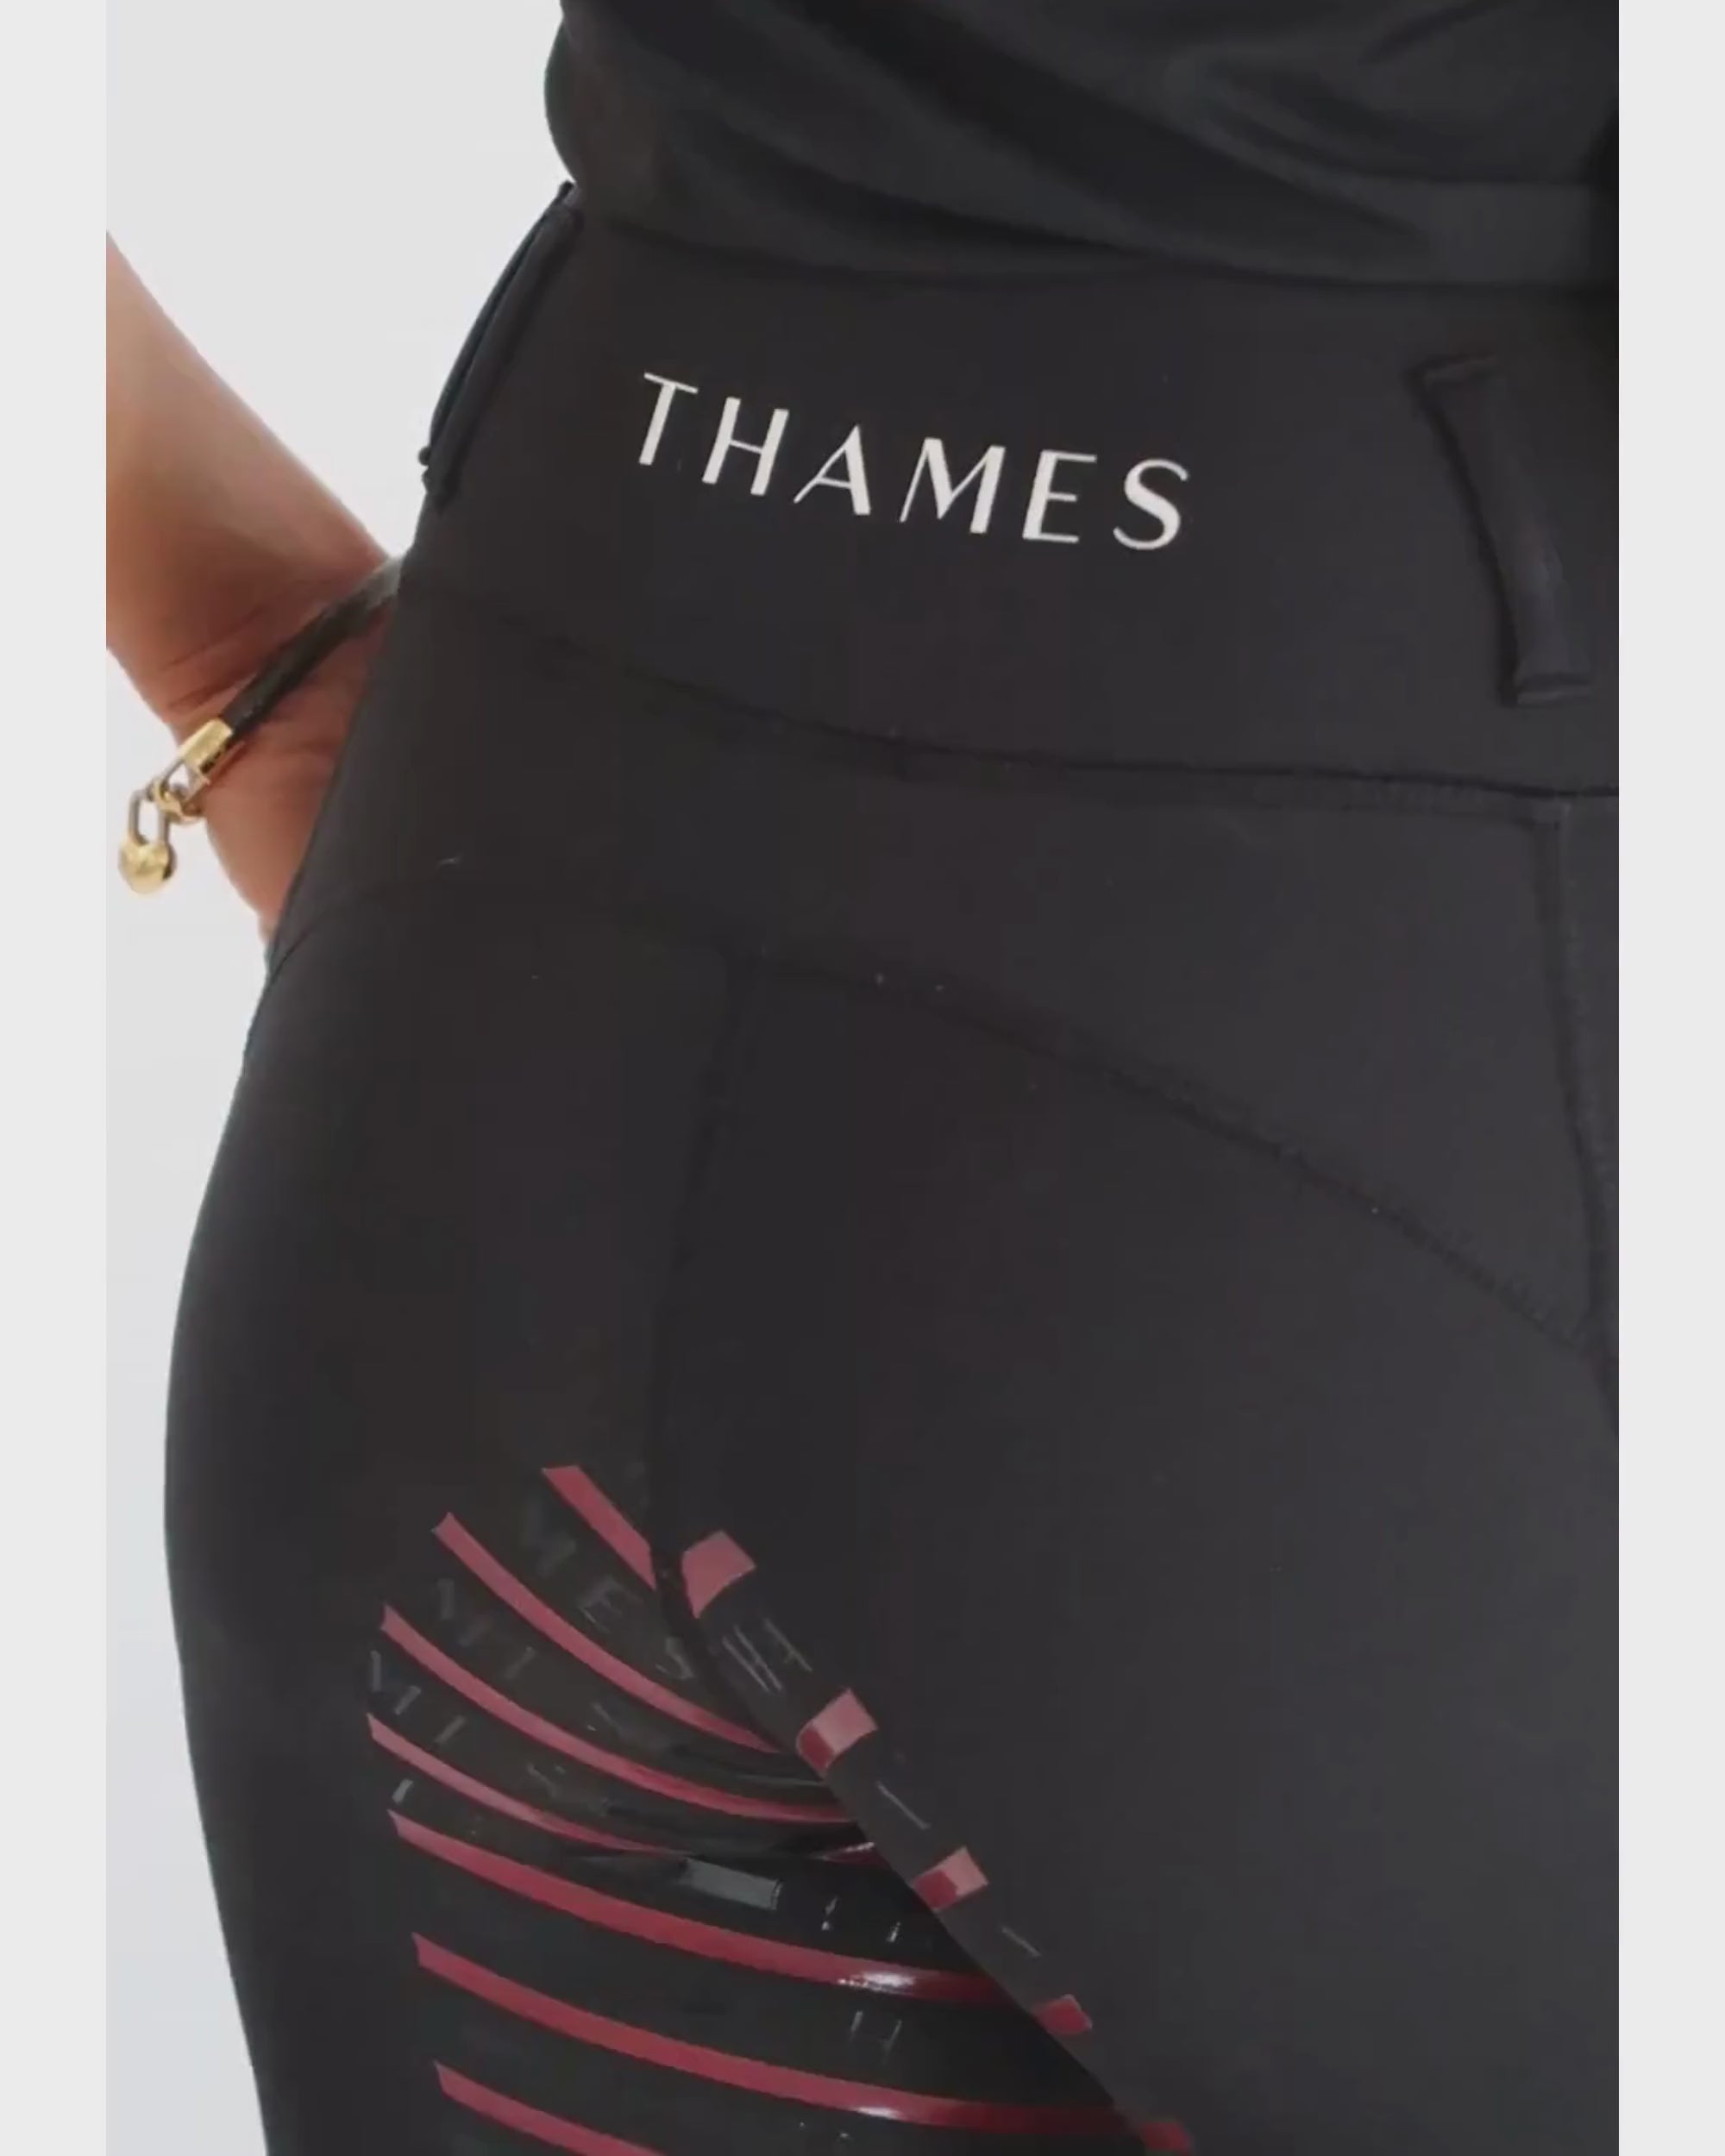 Thames Elite Riding Tights - Black+Red